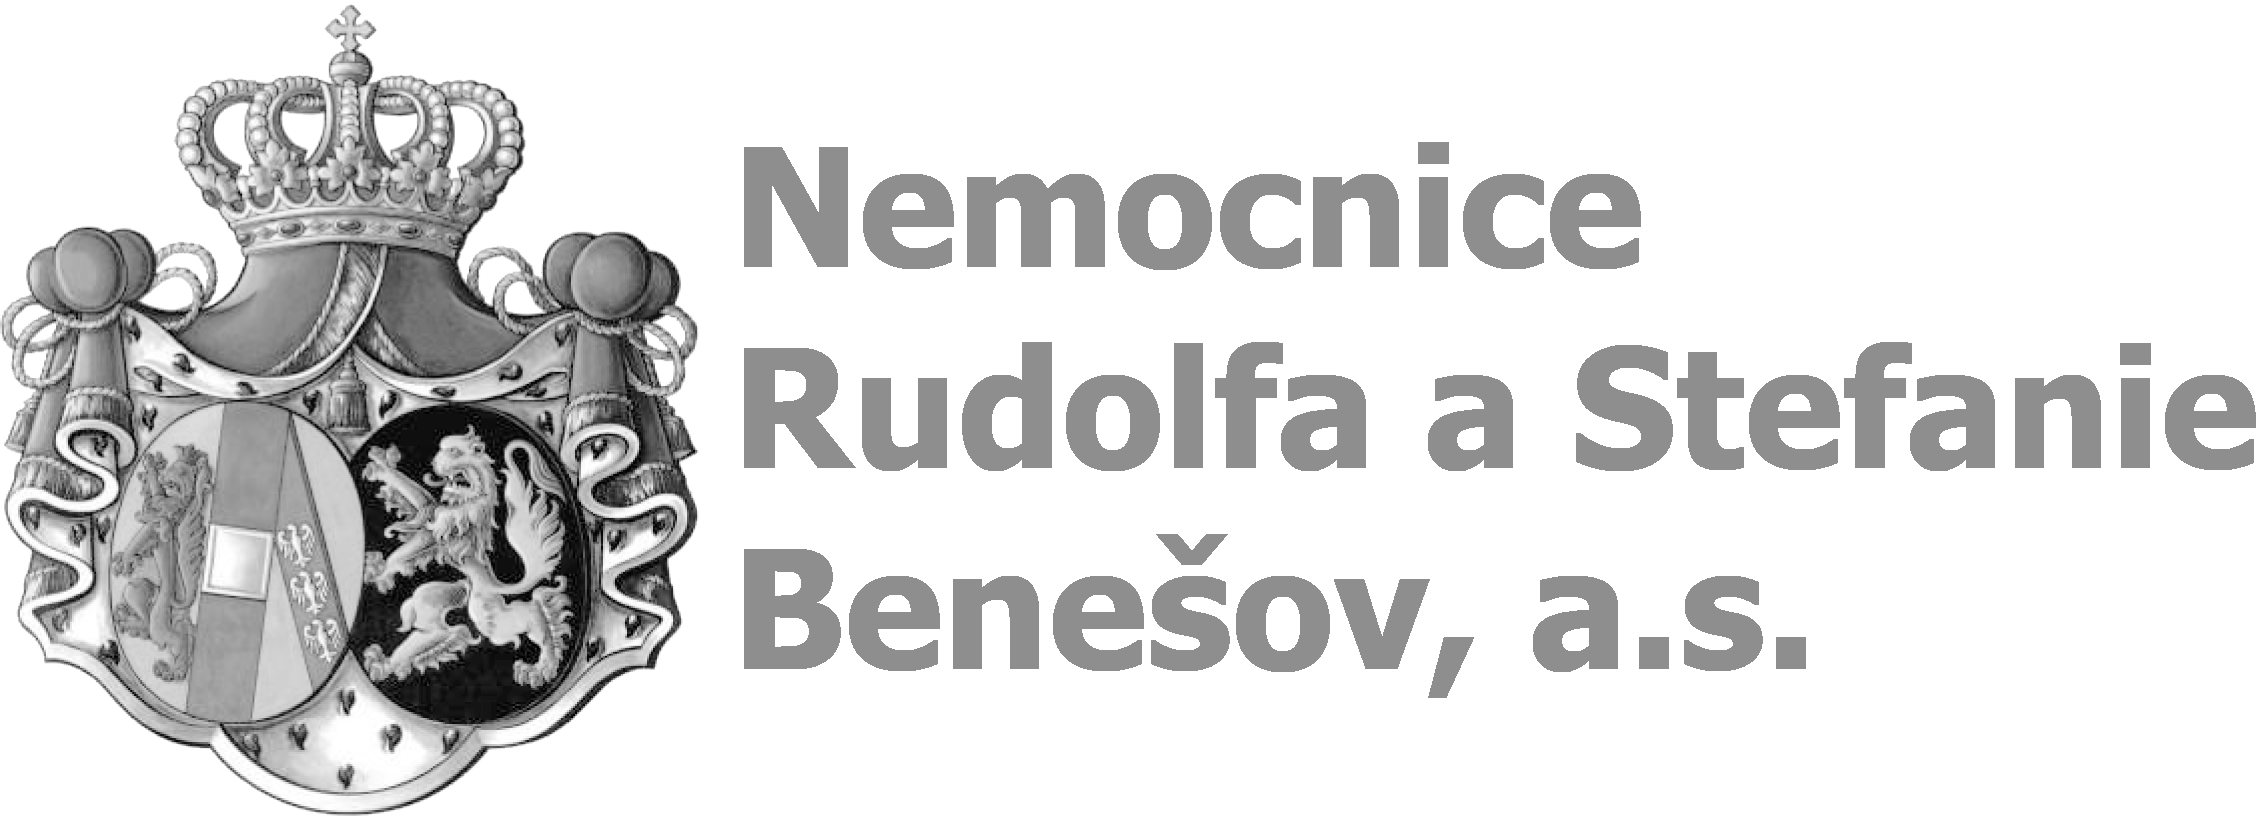 logo_Benesov_grayscale